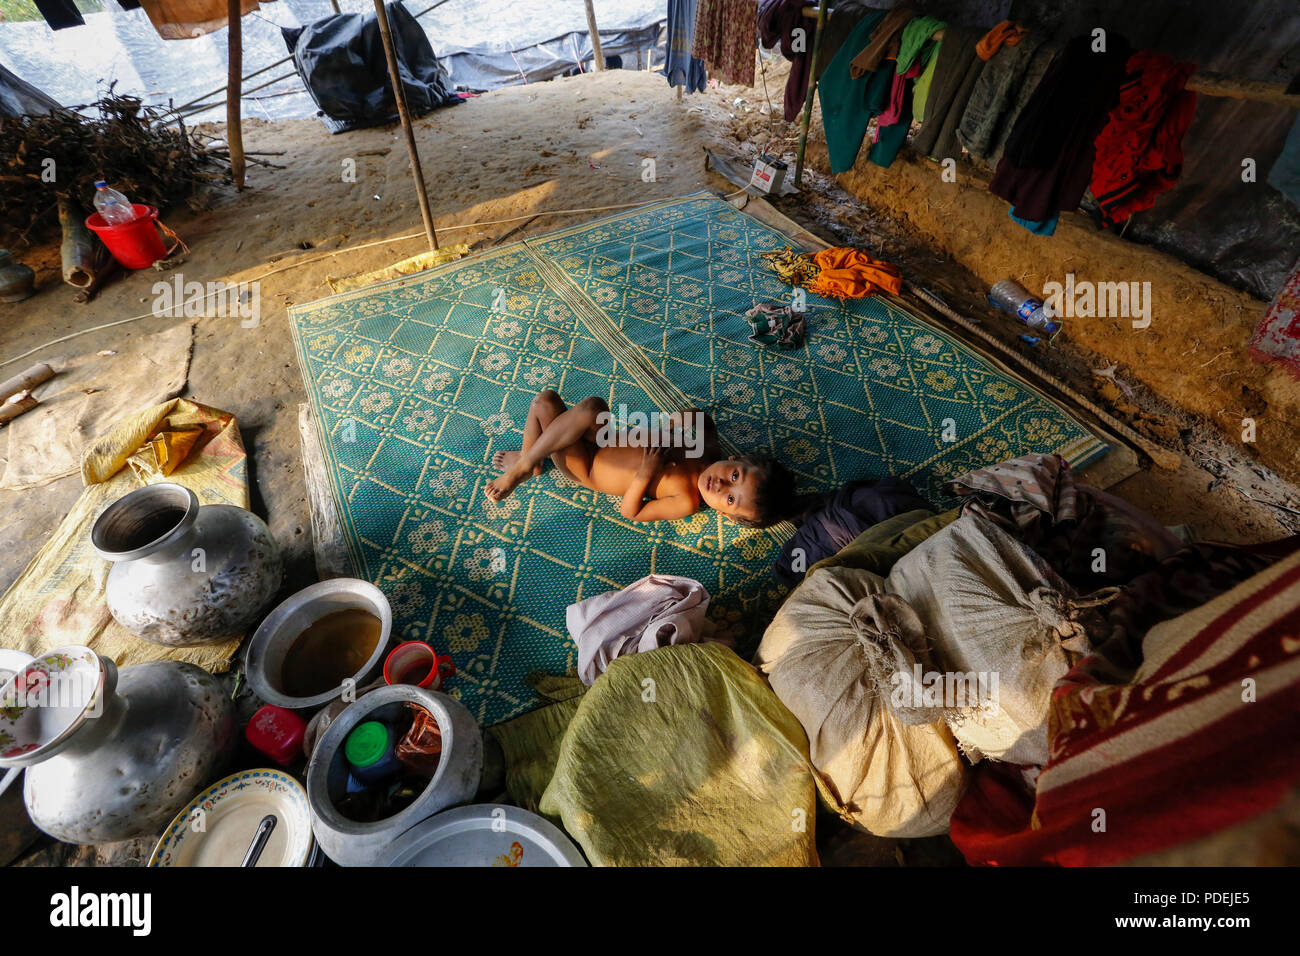 A Rohingya child in Kutupalong Refugee Camp, Cox's Bazar, Bangladesh Stock Photo